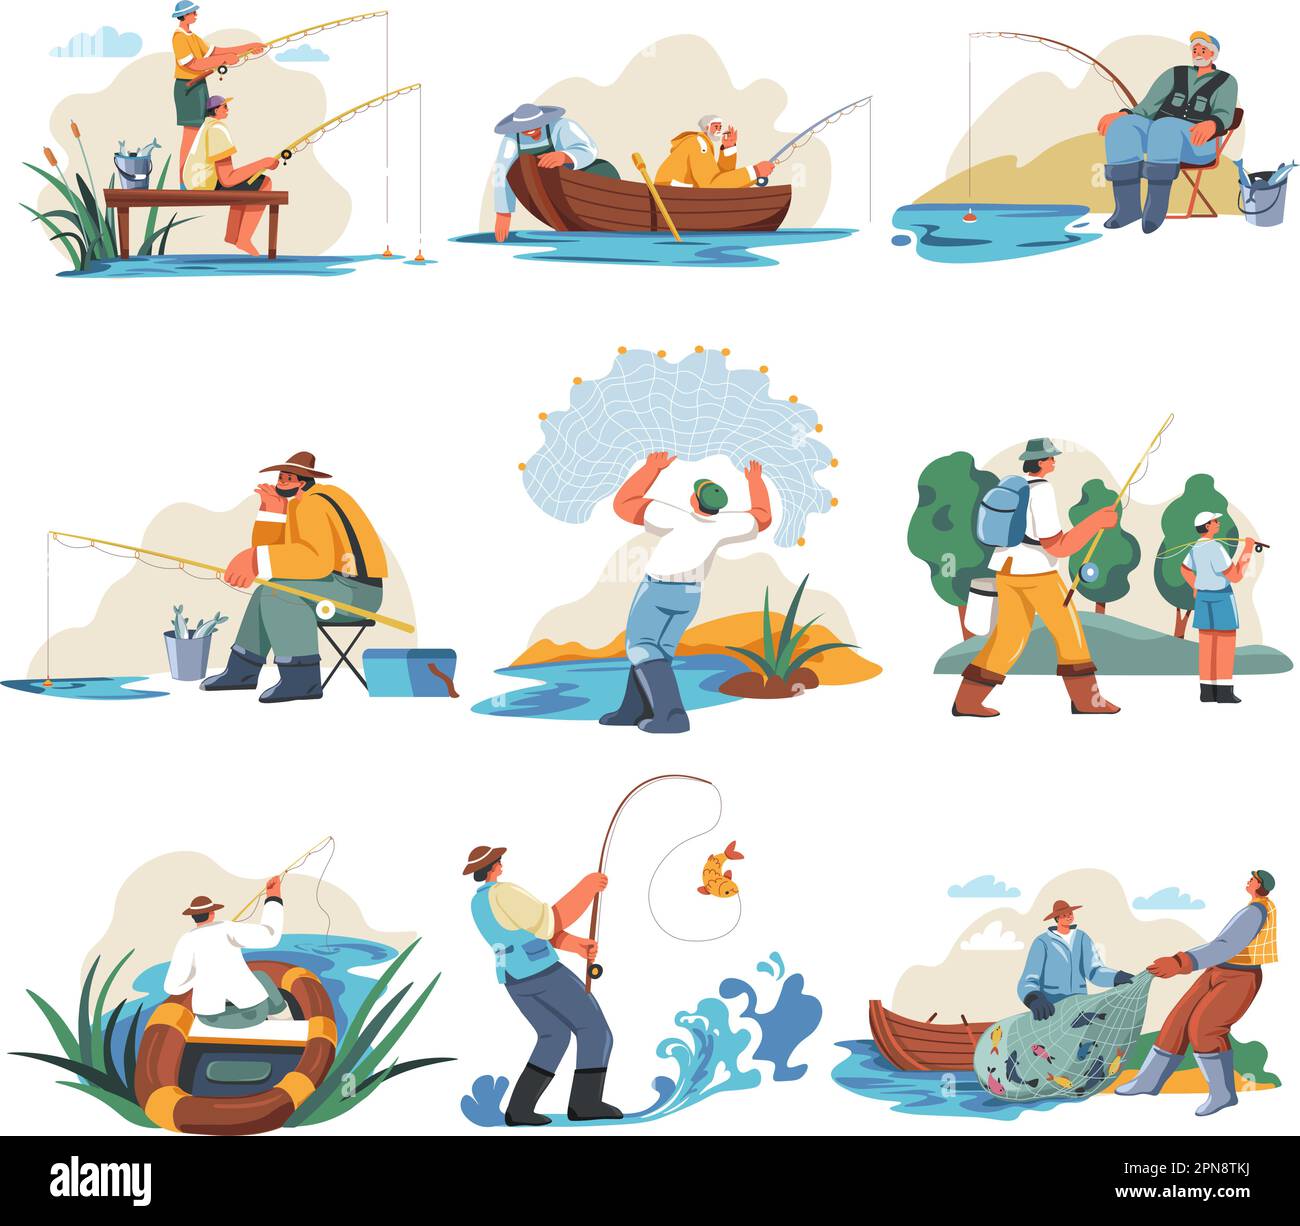 Fisher cartoon character. Fishermen holding fishing rod. Vector